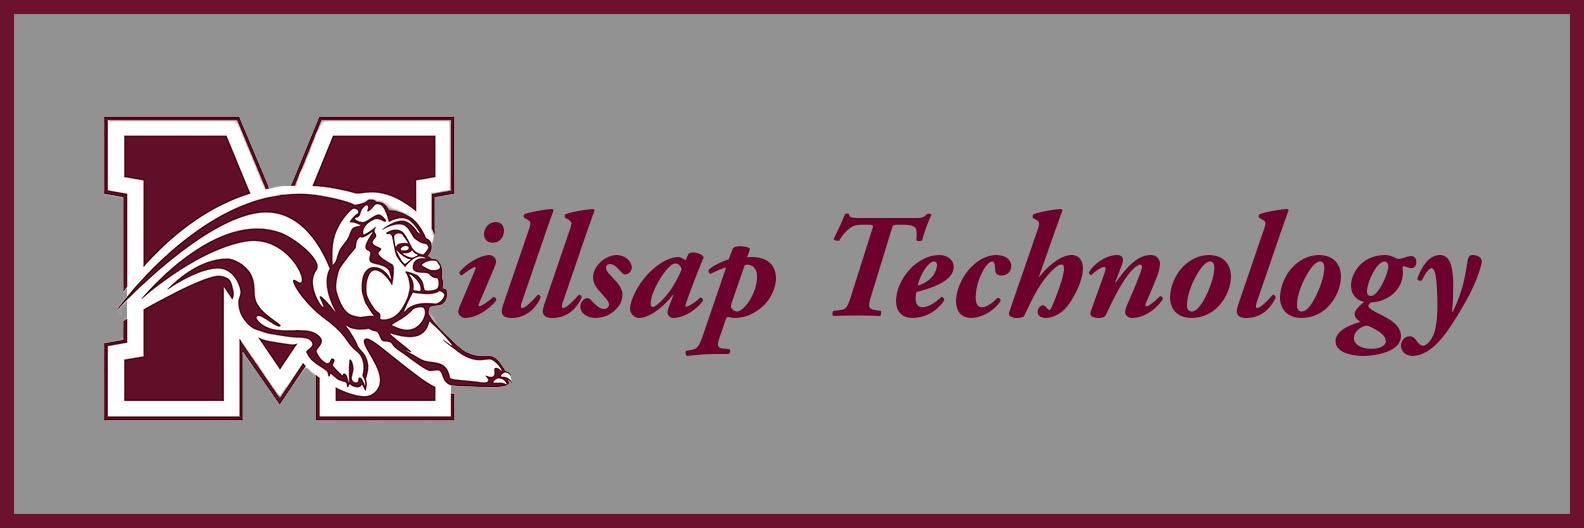 Millsap Technology 